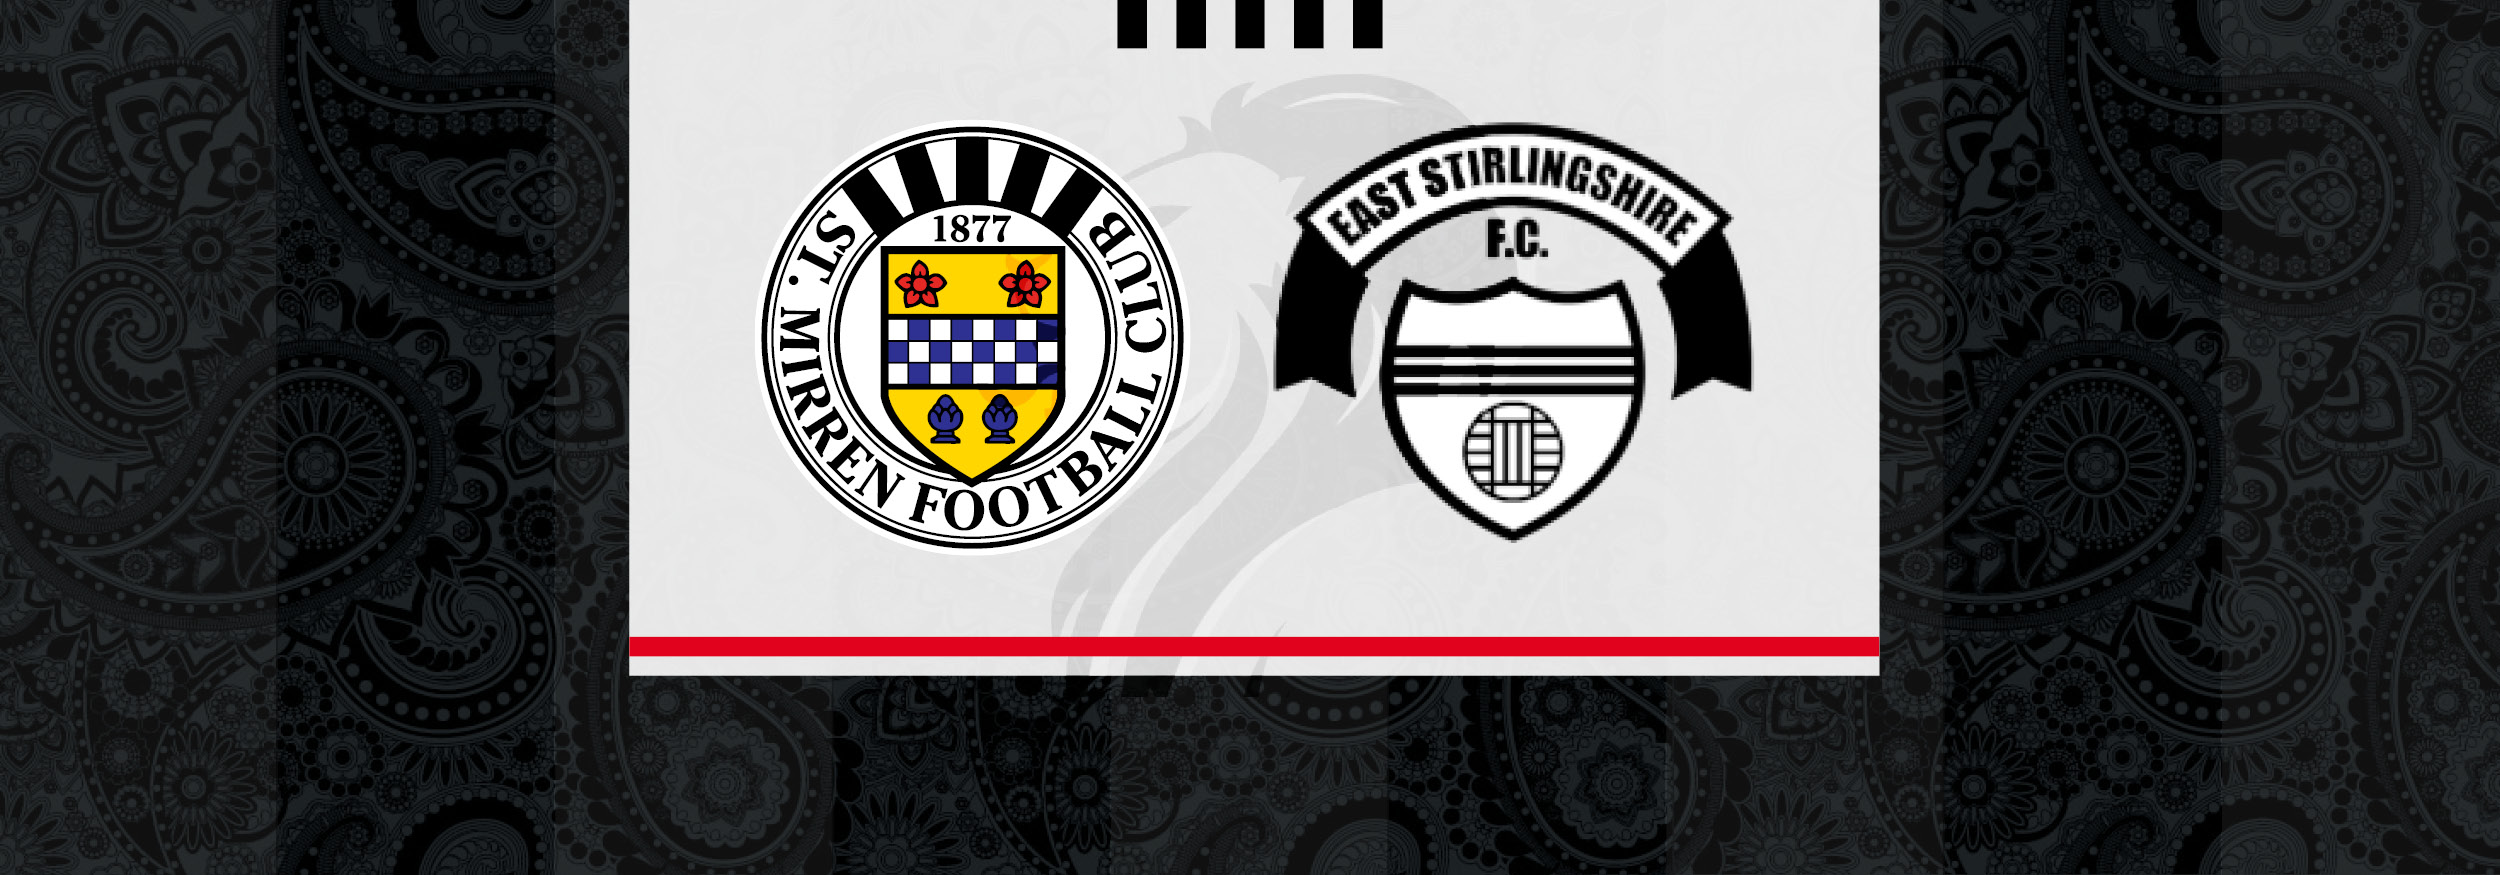 Matchday Info: St Mirren B v East Stirlingshire